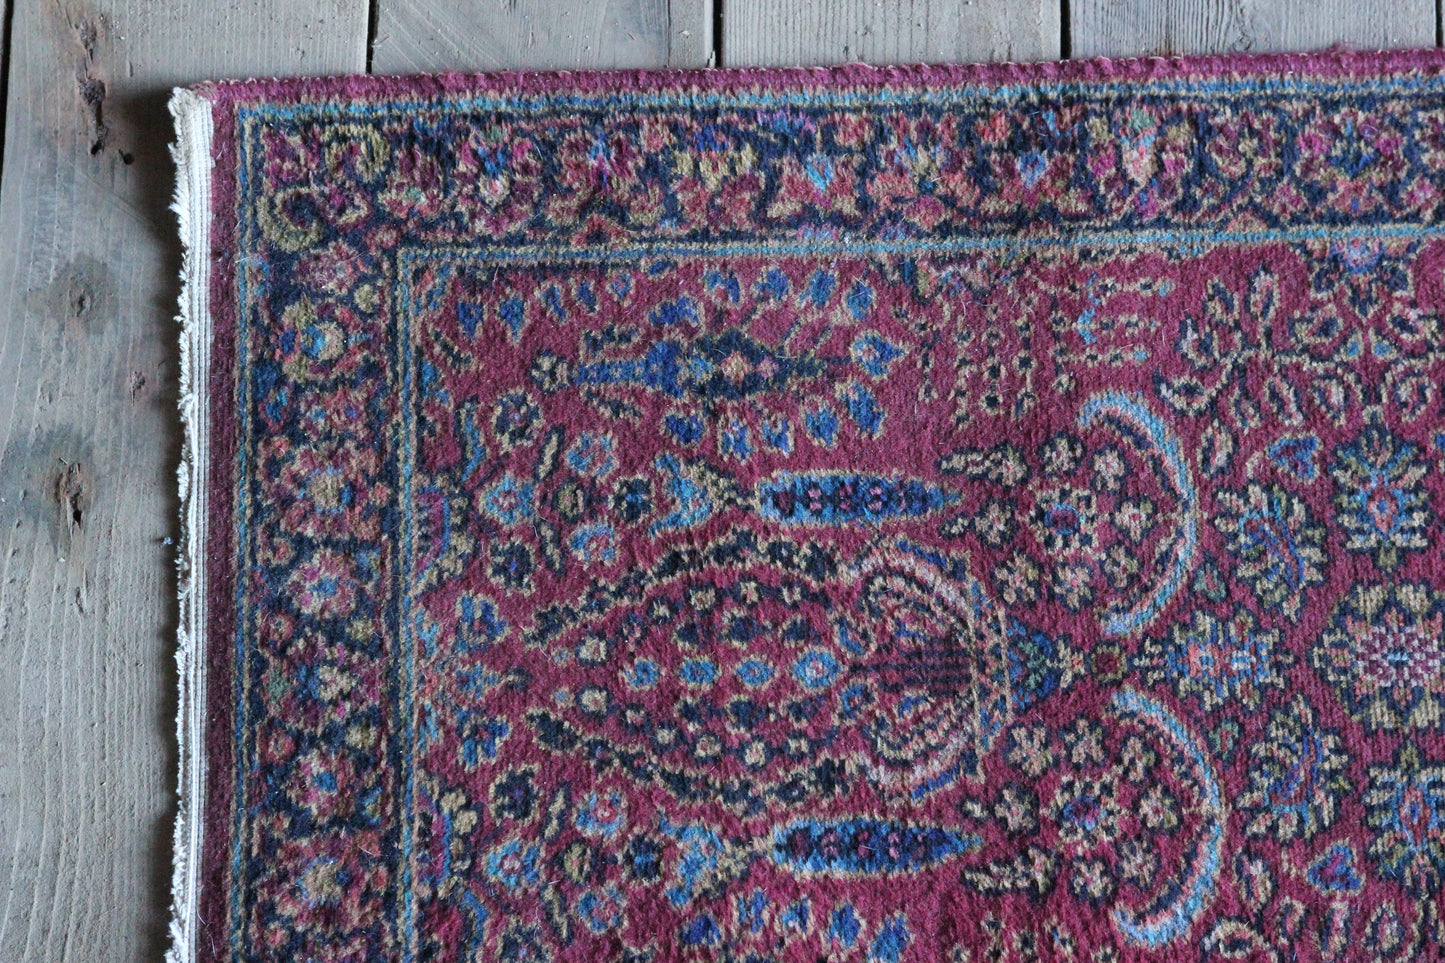 26" x 49" Lanamar by Karastan Kashan Machine Woven Rug, Made in USA